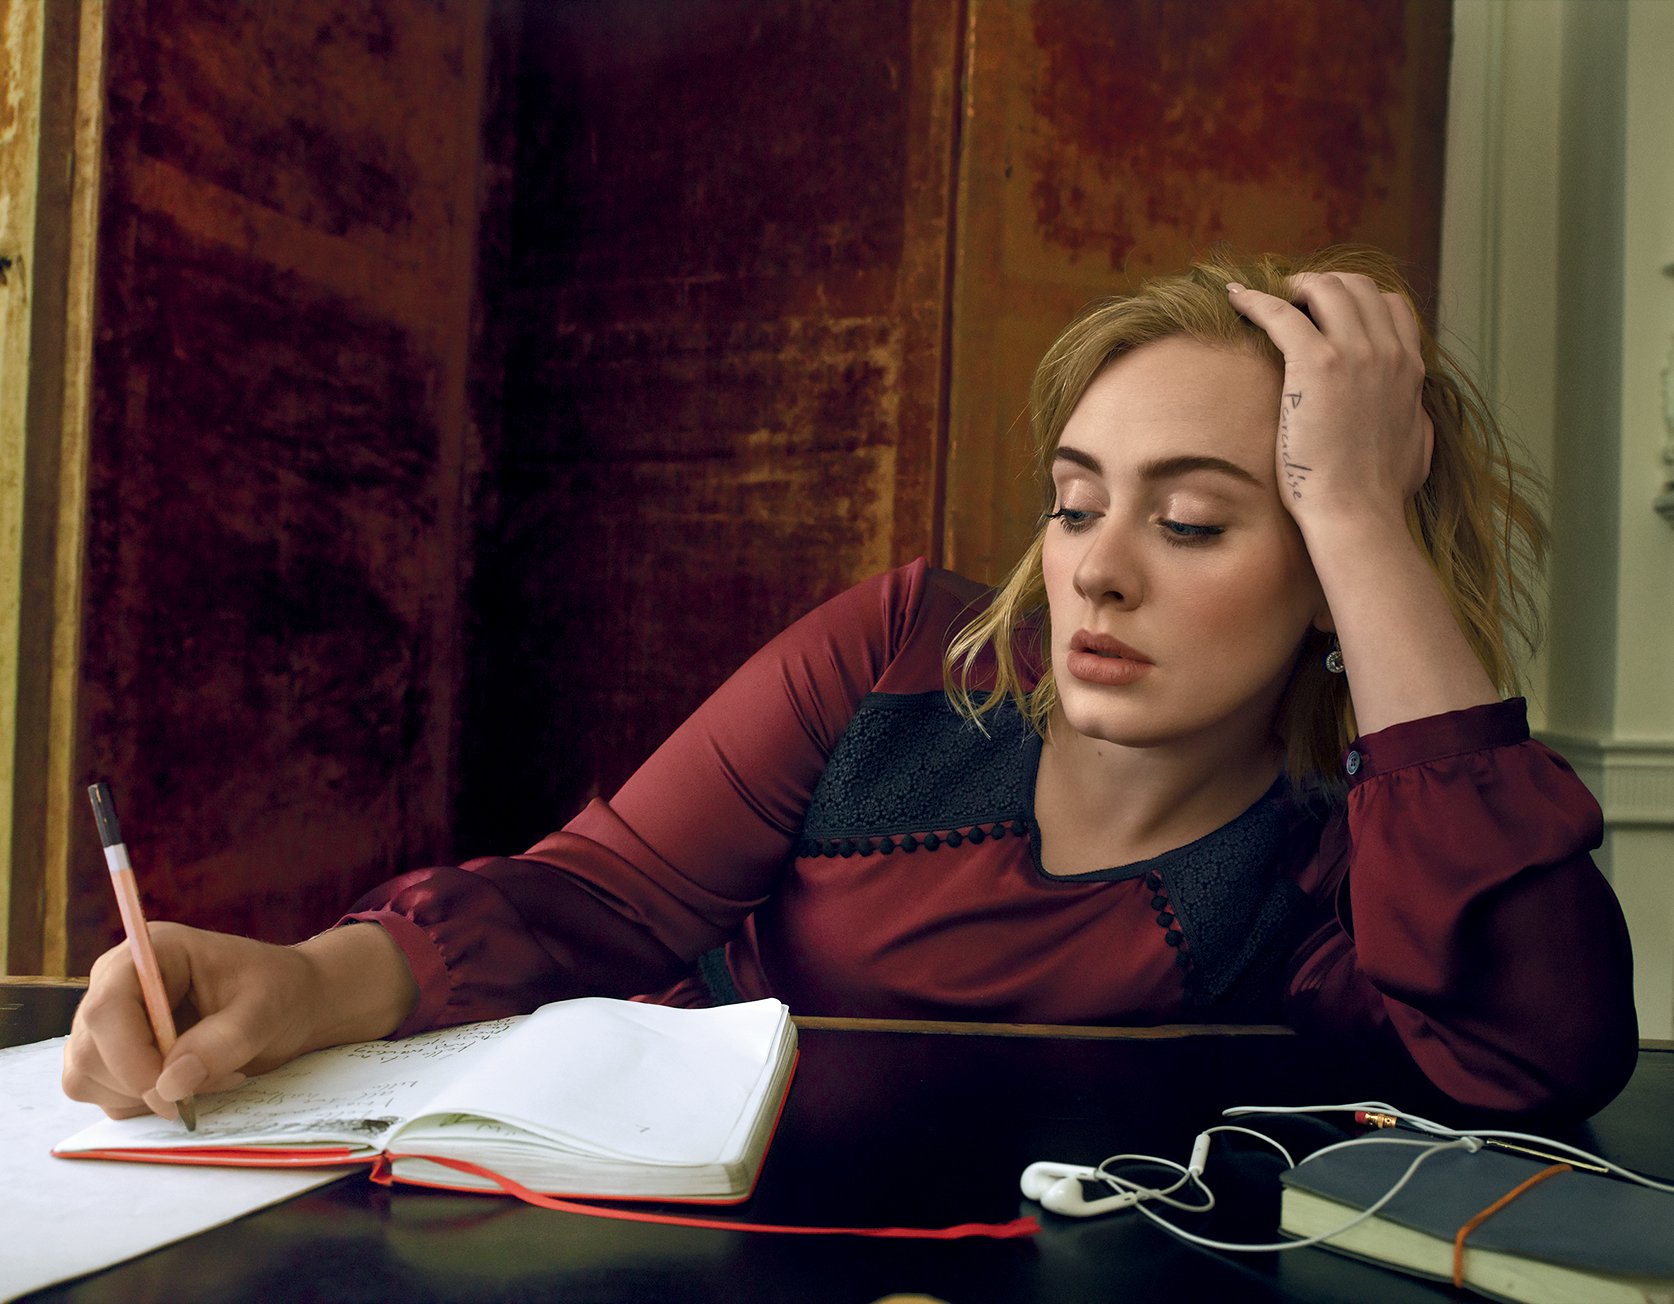 photographer Annie Leibovitz photographs acclaimed singer Adele